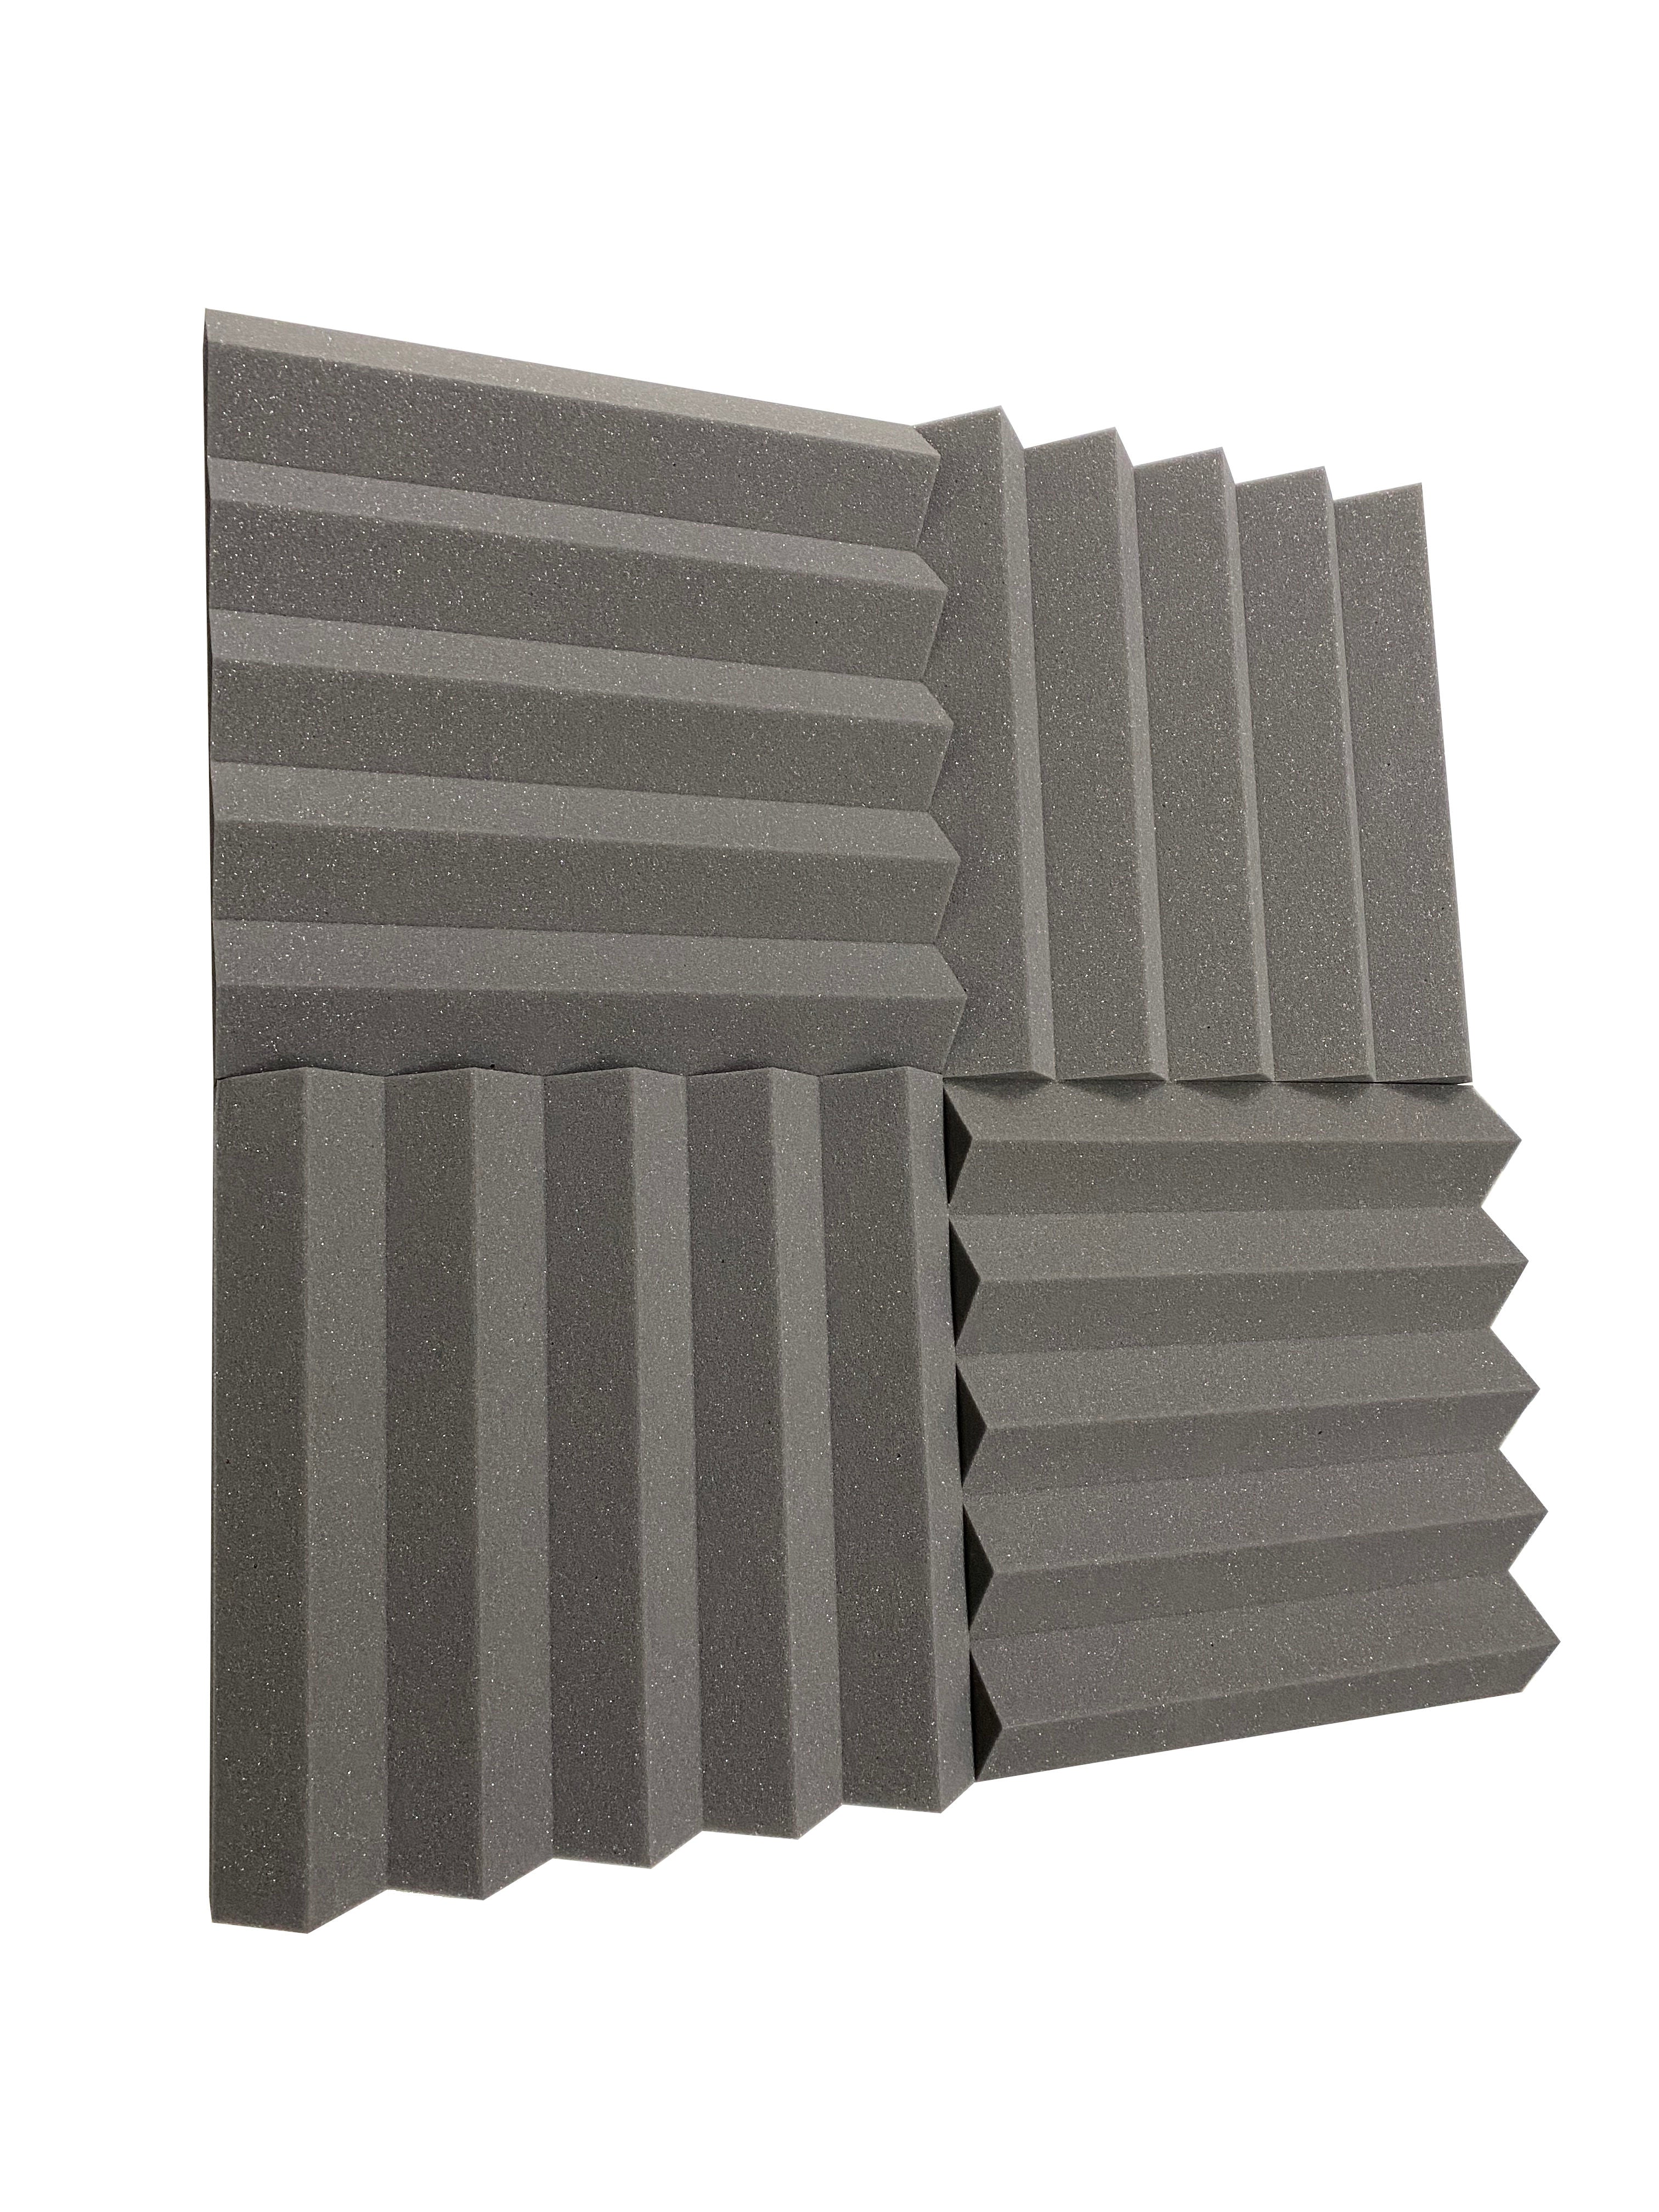 Wedge PRO 15" Acoustic Studio Foam Tile Pack